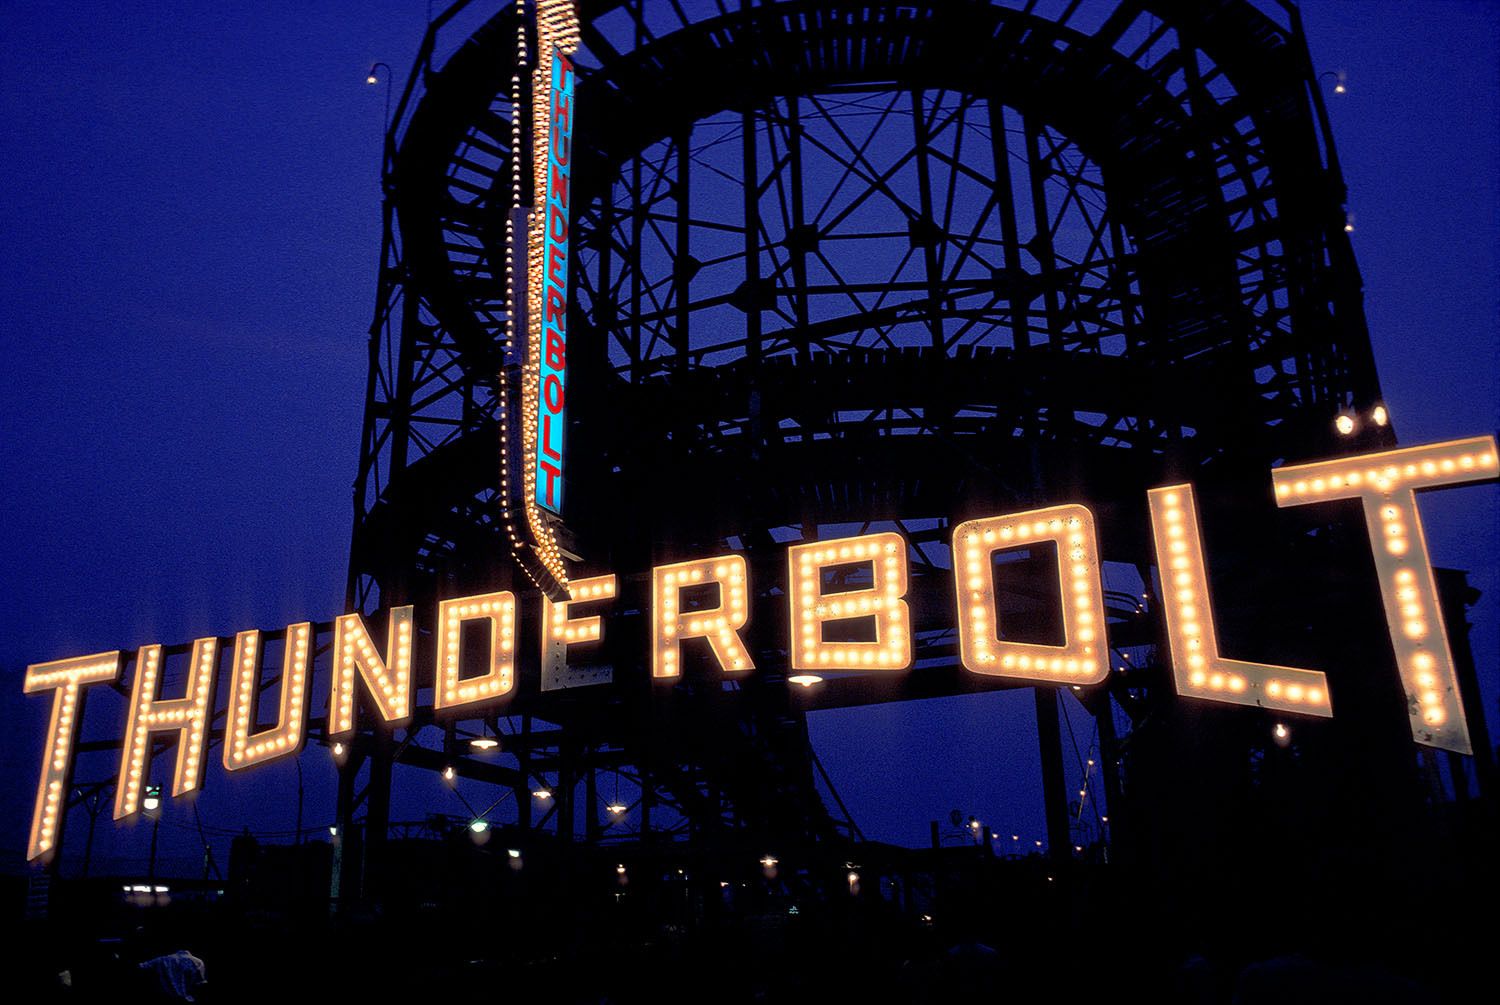 The Thunderbolt rollercoaster, c. 1978